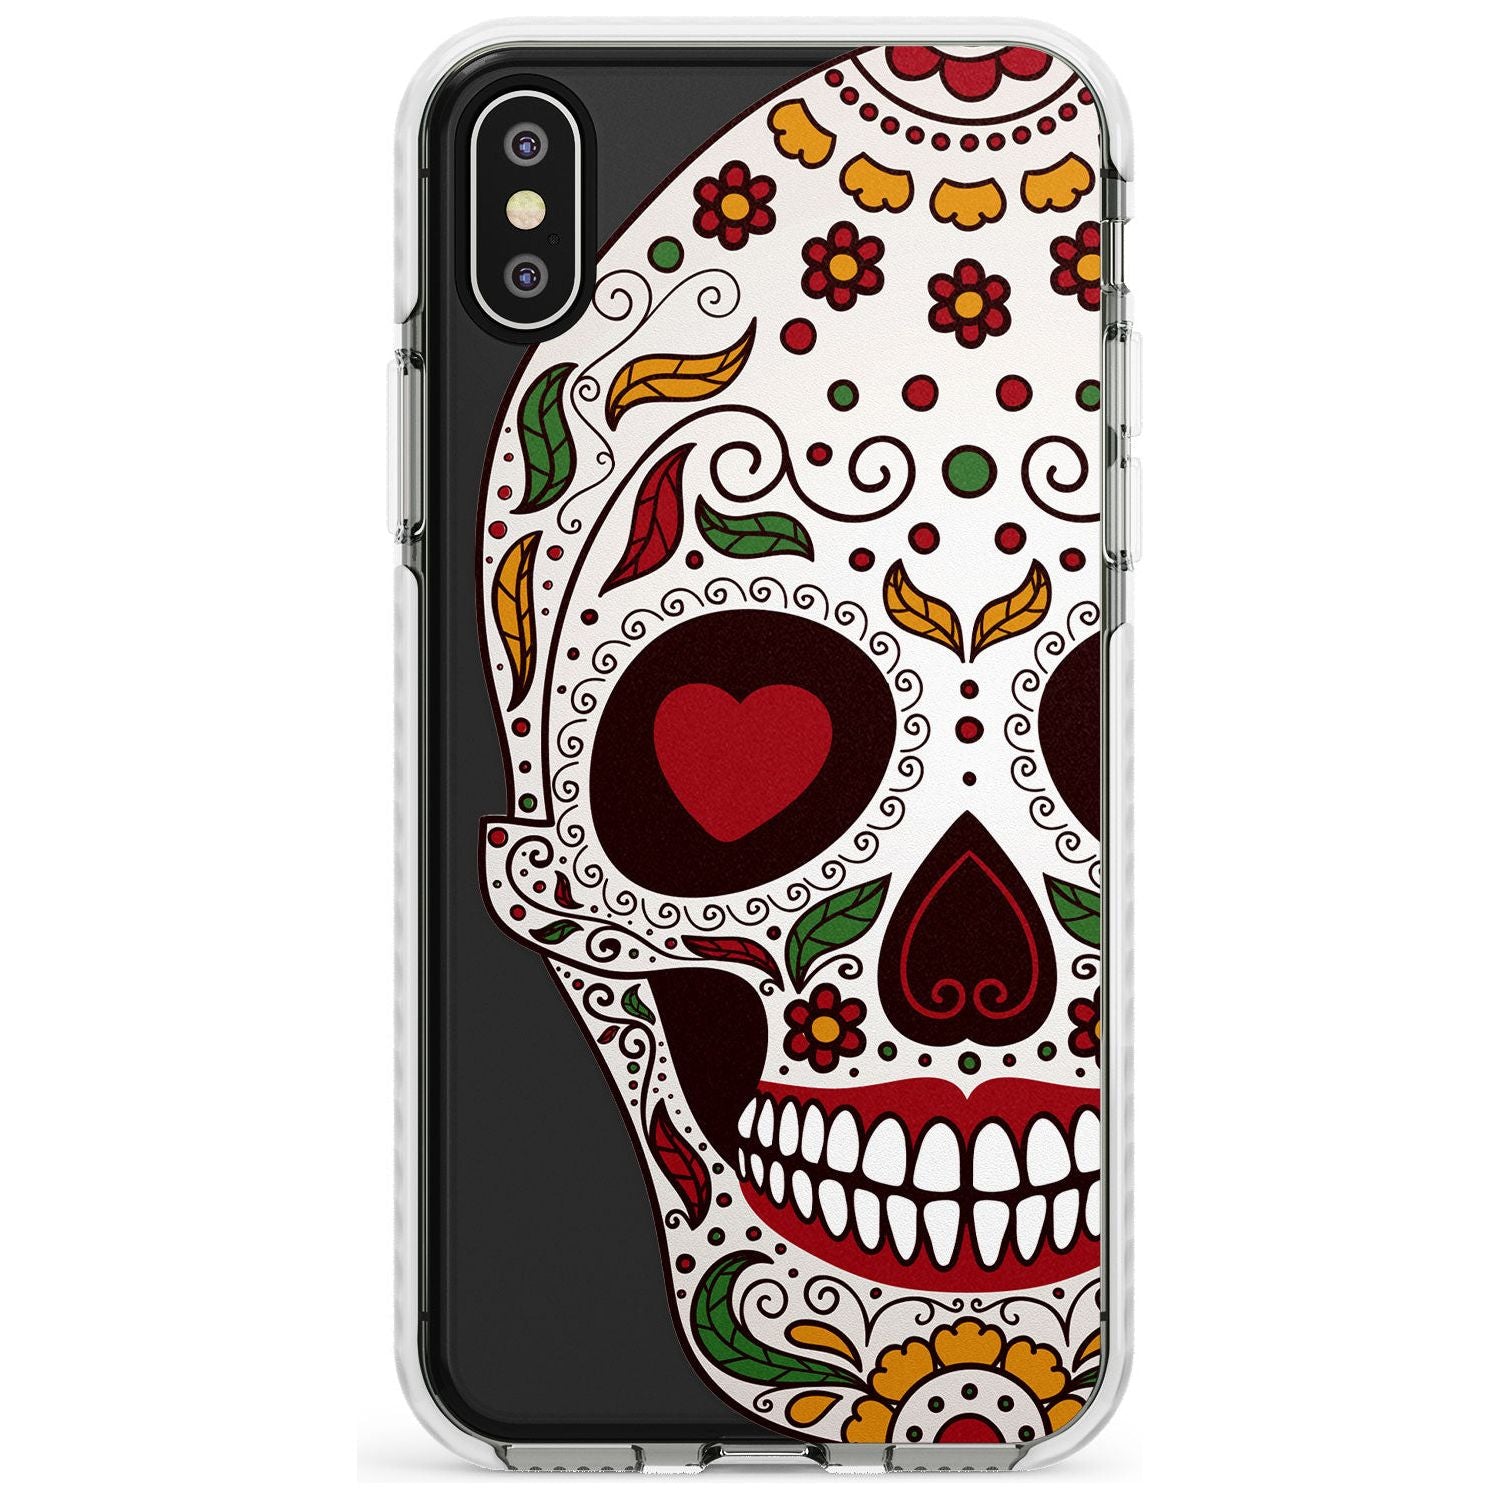 Autumn Sugar Skull Impact Phone Case for iPhone X XS Max XR